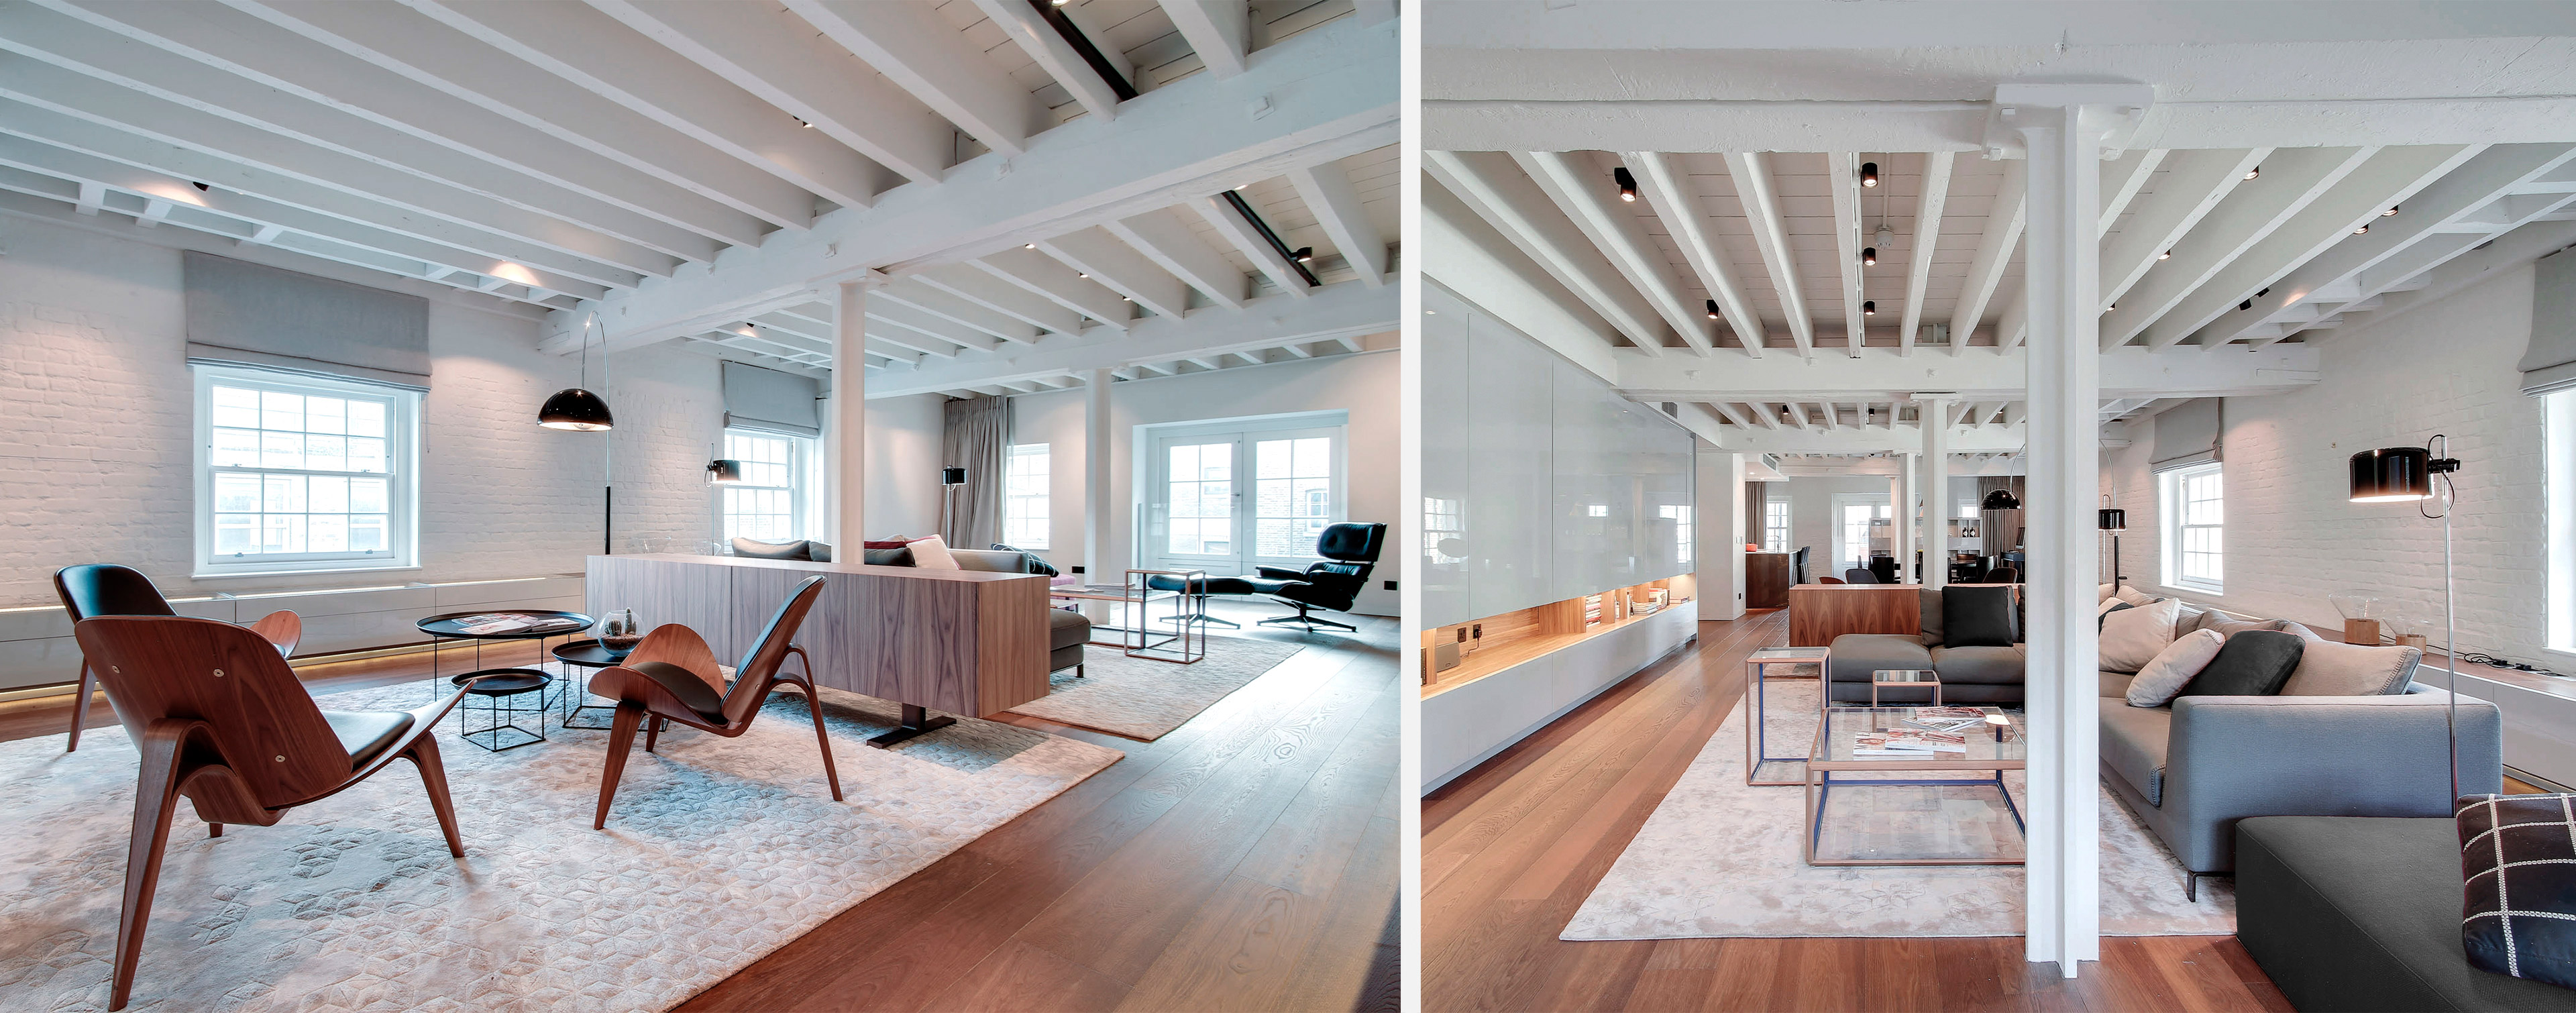 luv studio luxury architects london tapestry apartment IMG 01 - Tapestry Loft